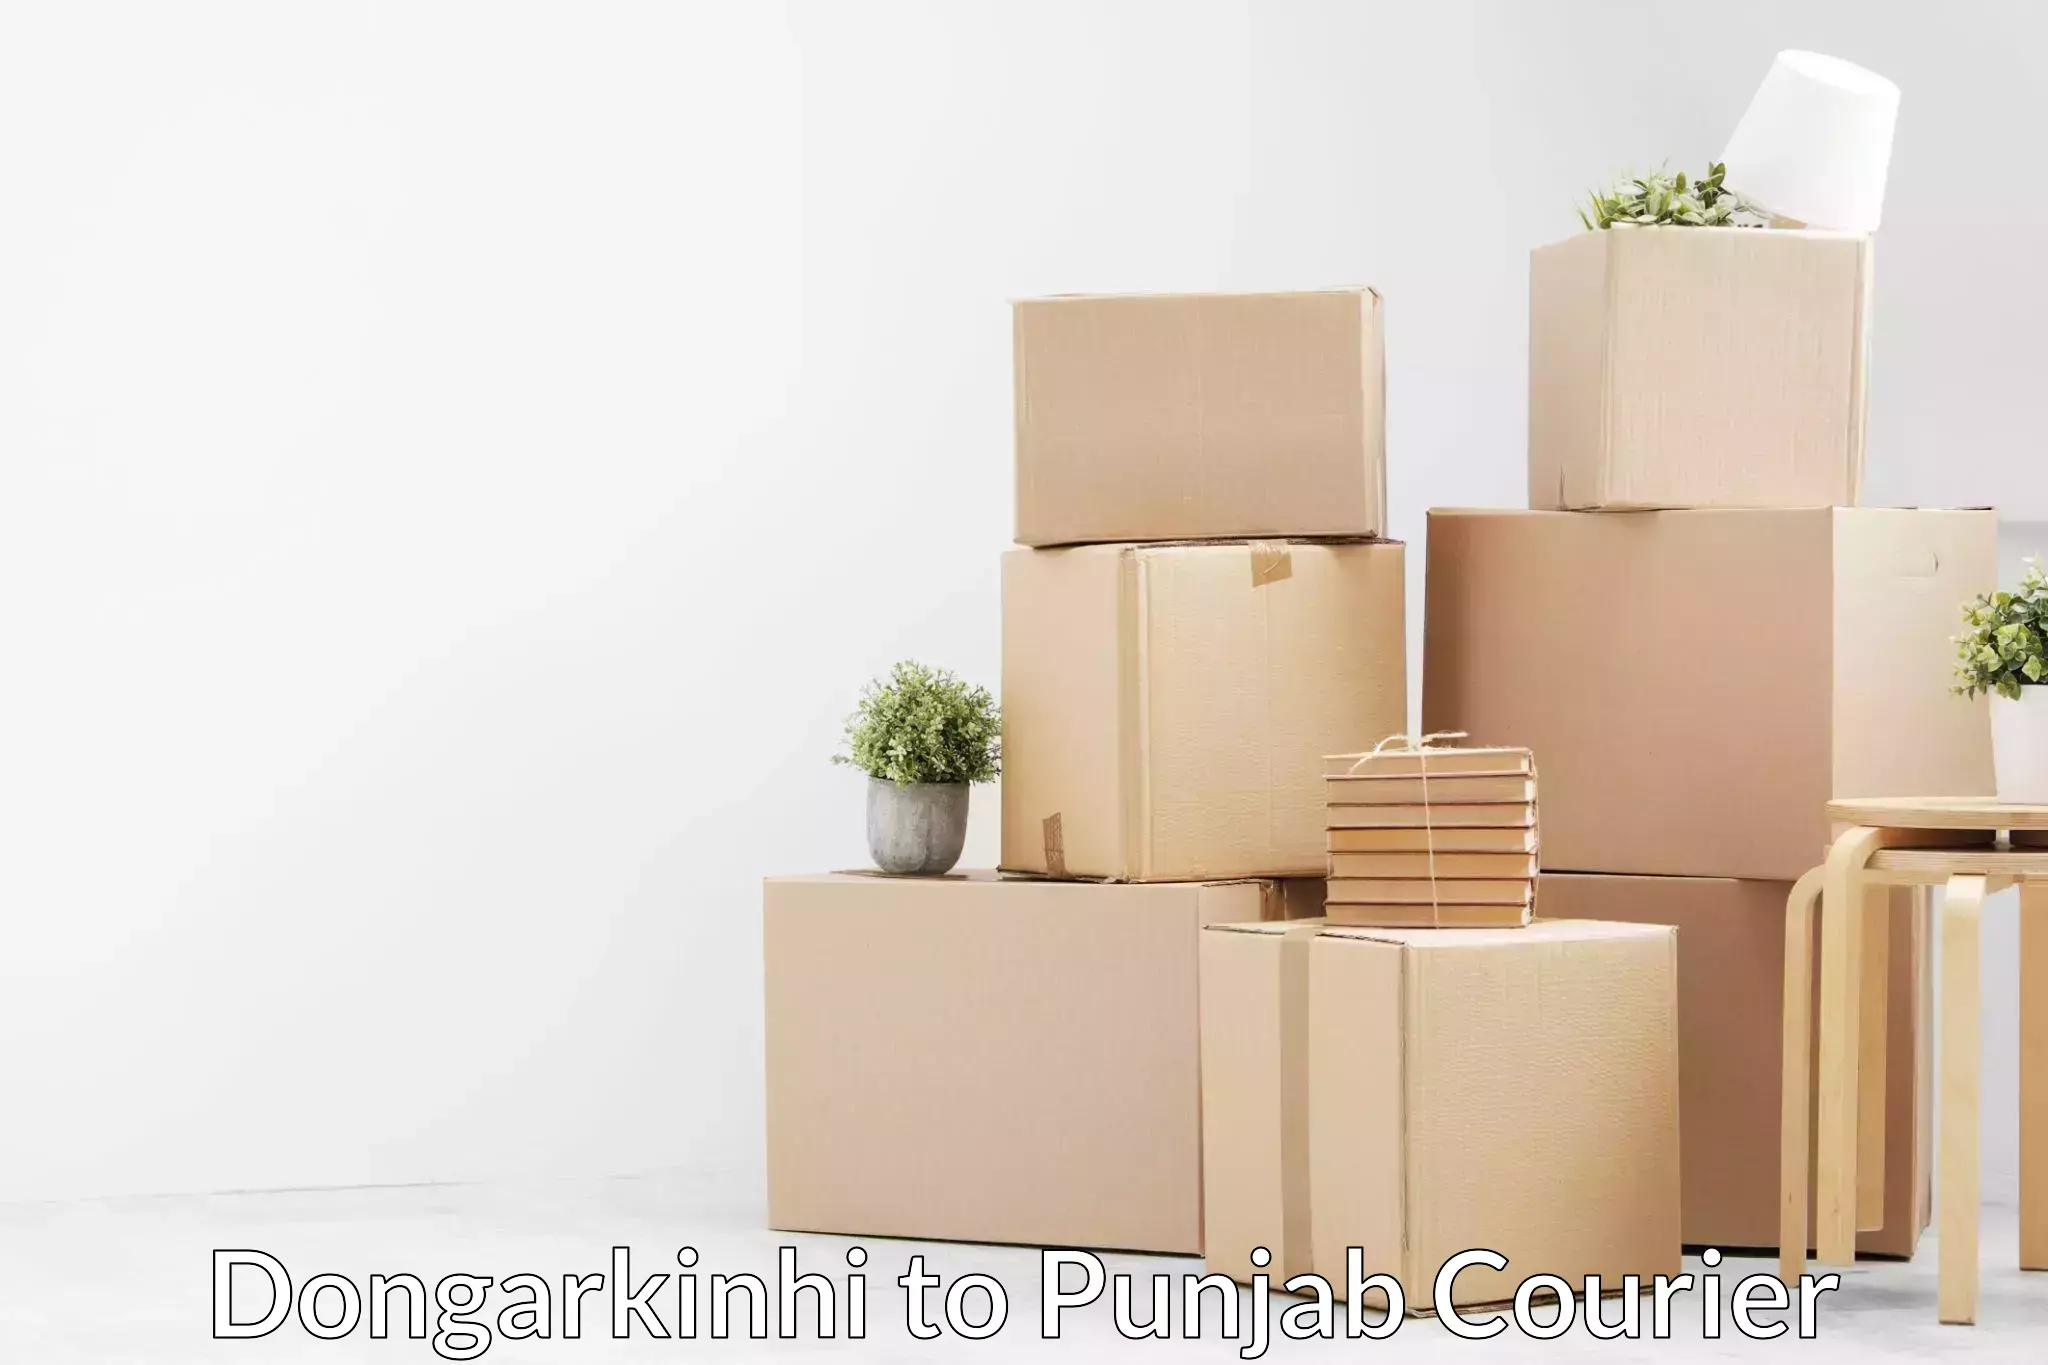 Professional moving assistance Dongarkinhi to Punjab